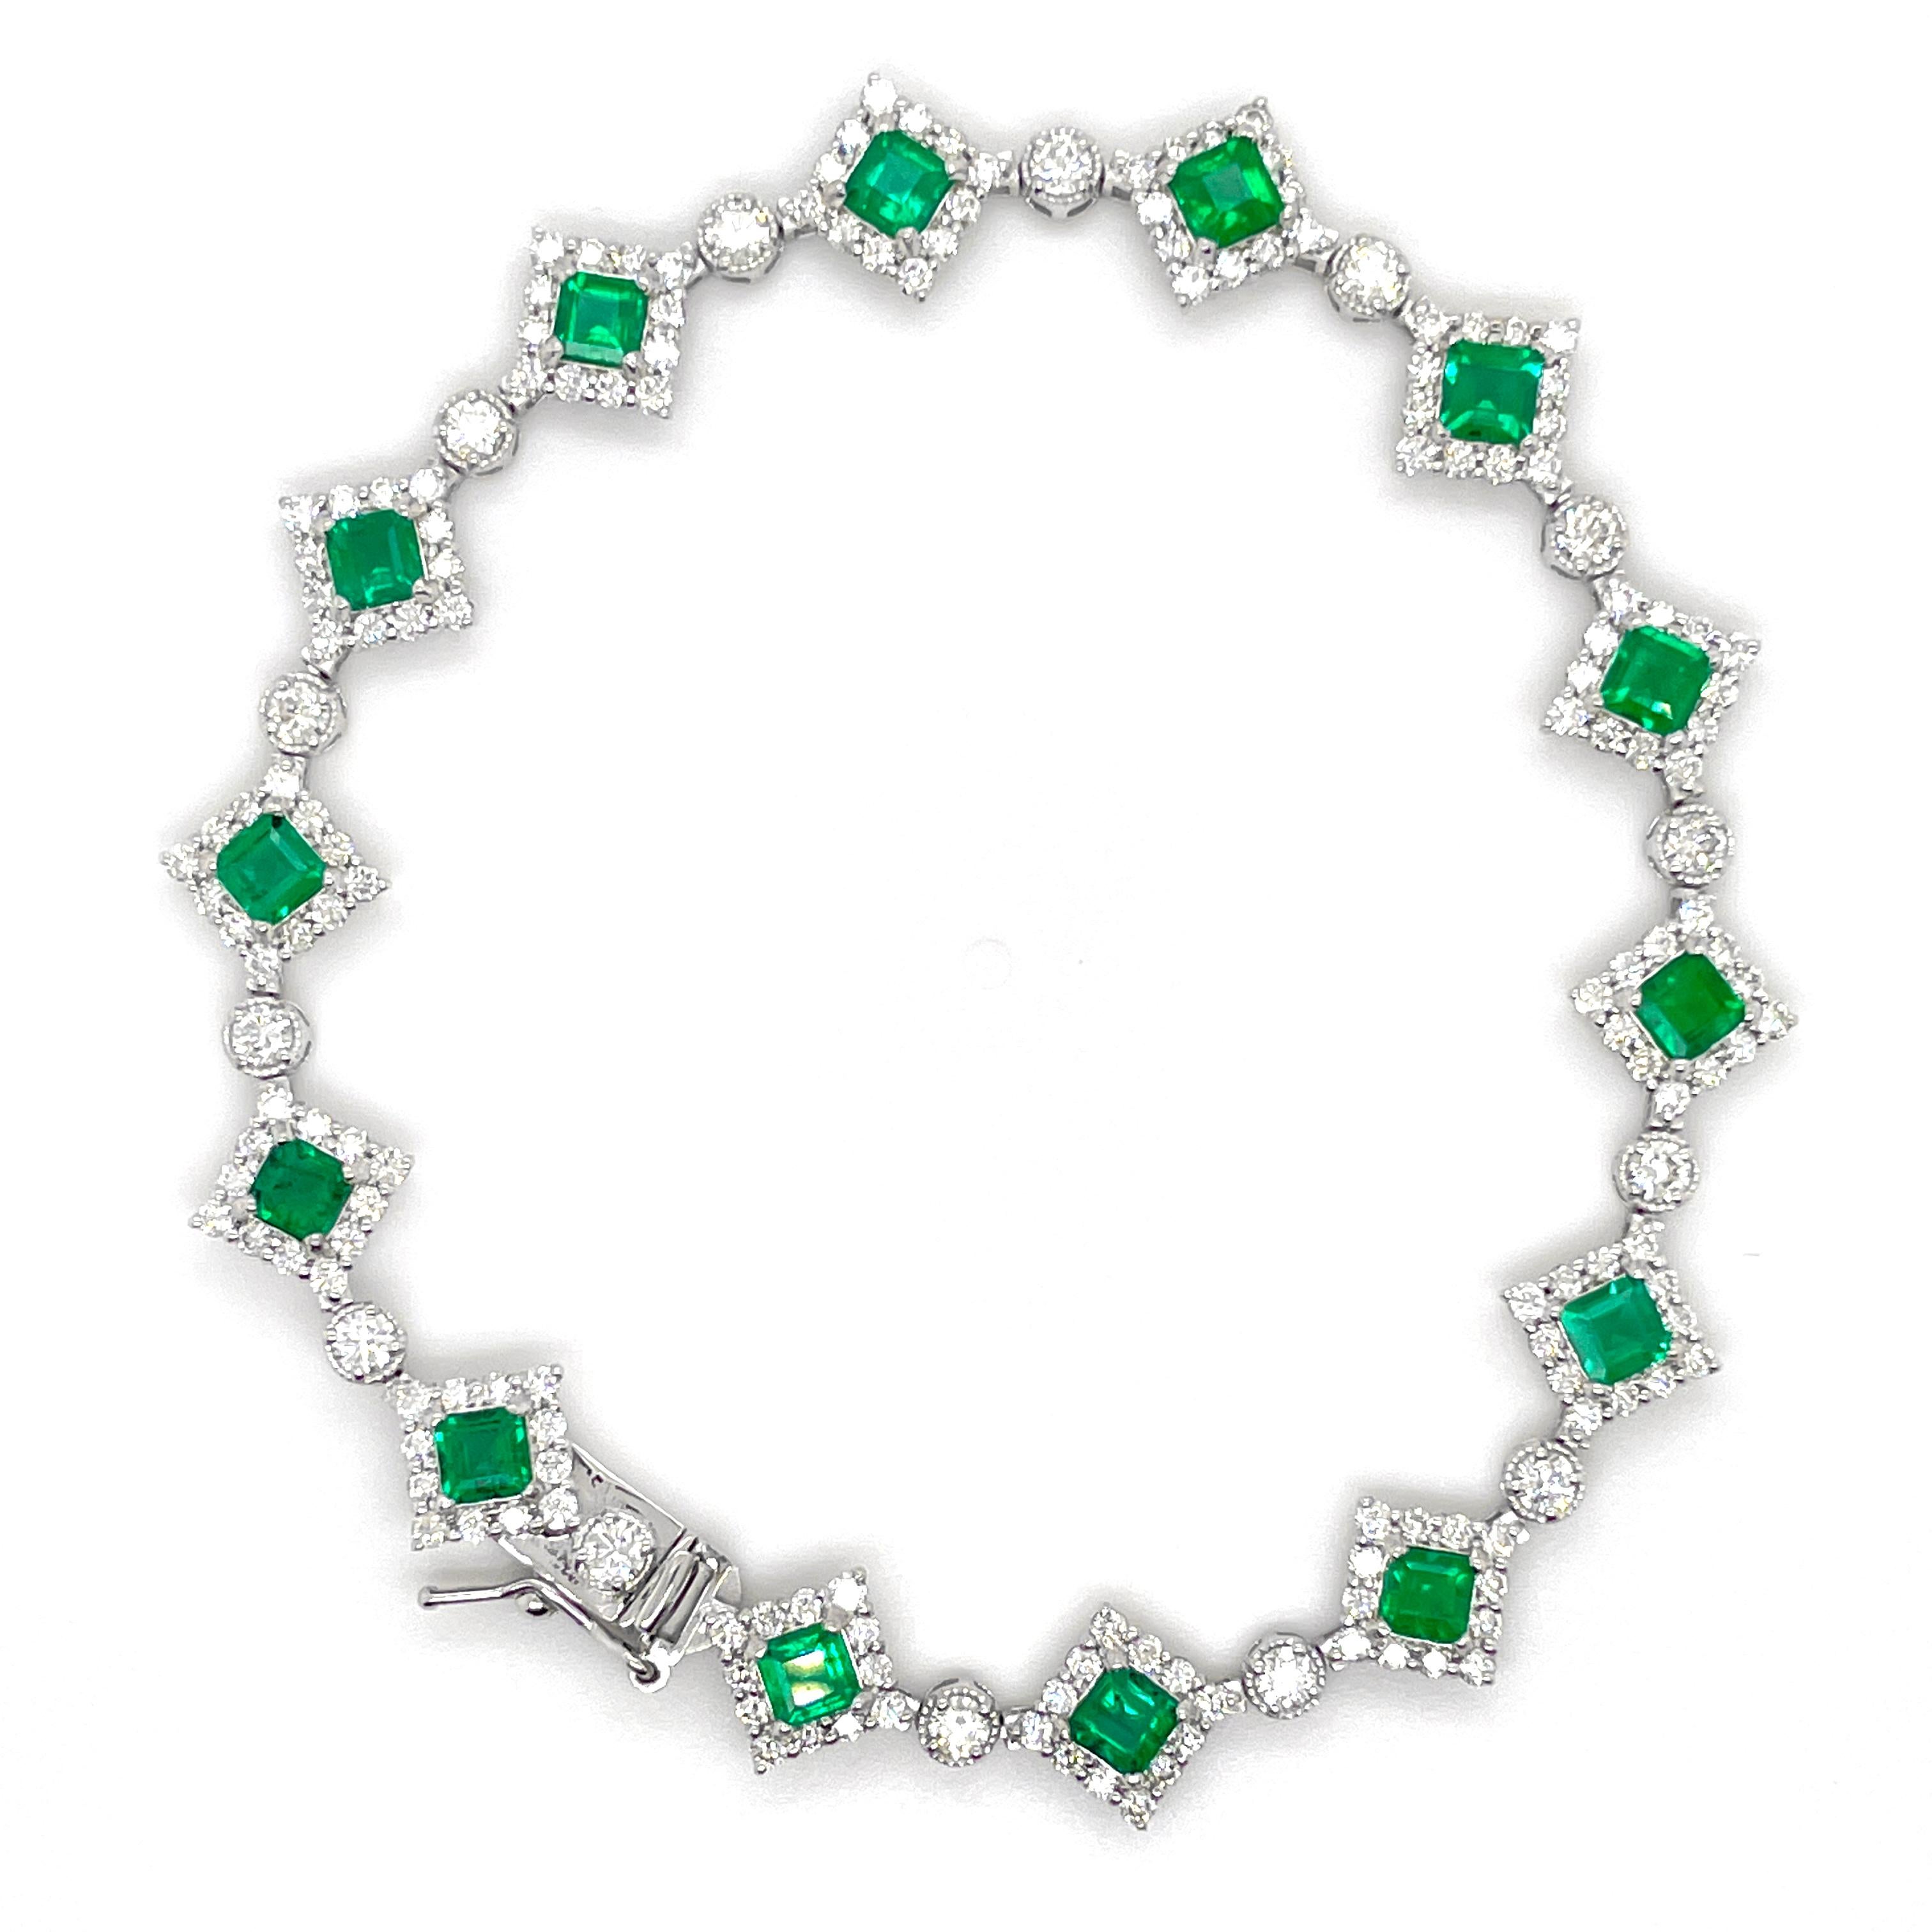 Modern 2.91 Carat Natural Emeralds and Diamonds Tennis Bracelet Set in Platinum